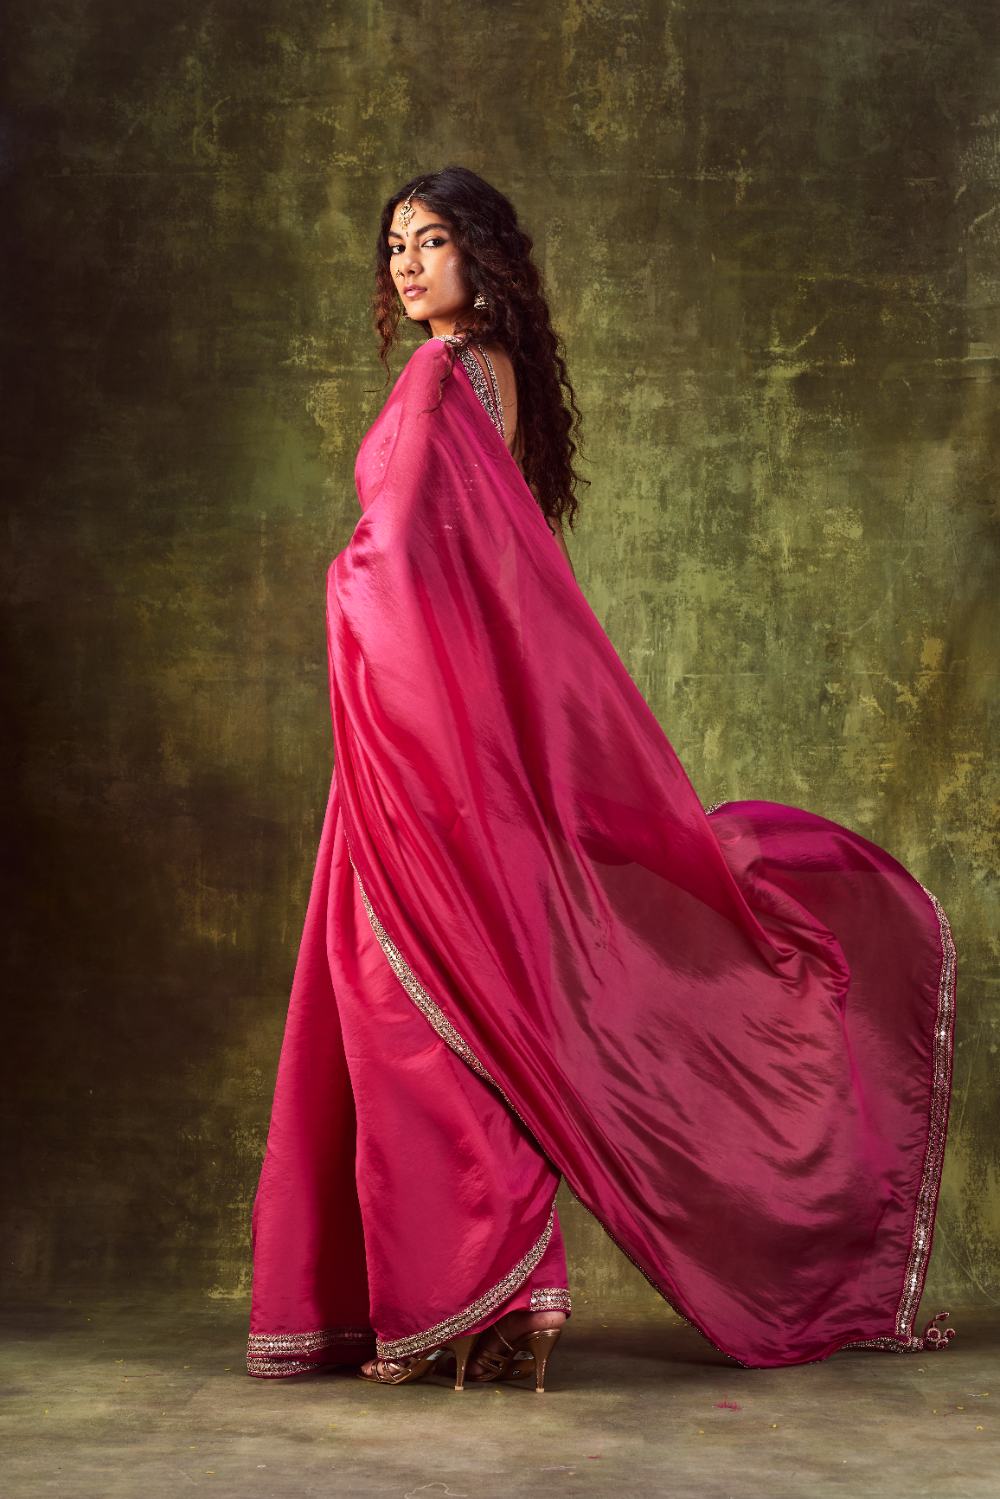 Priya Mani Raj in a hot pink saree for 